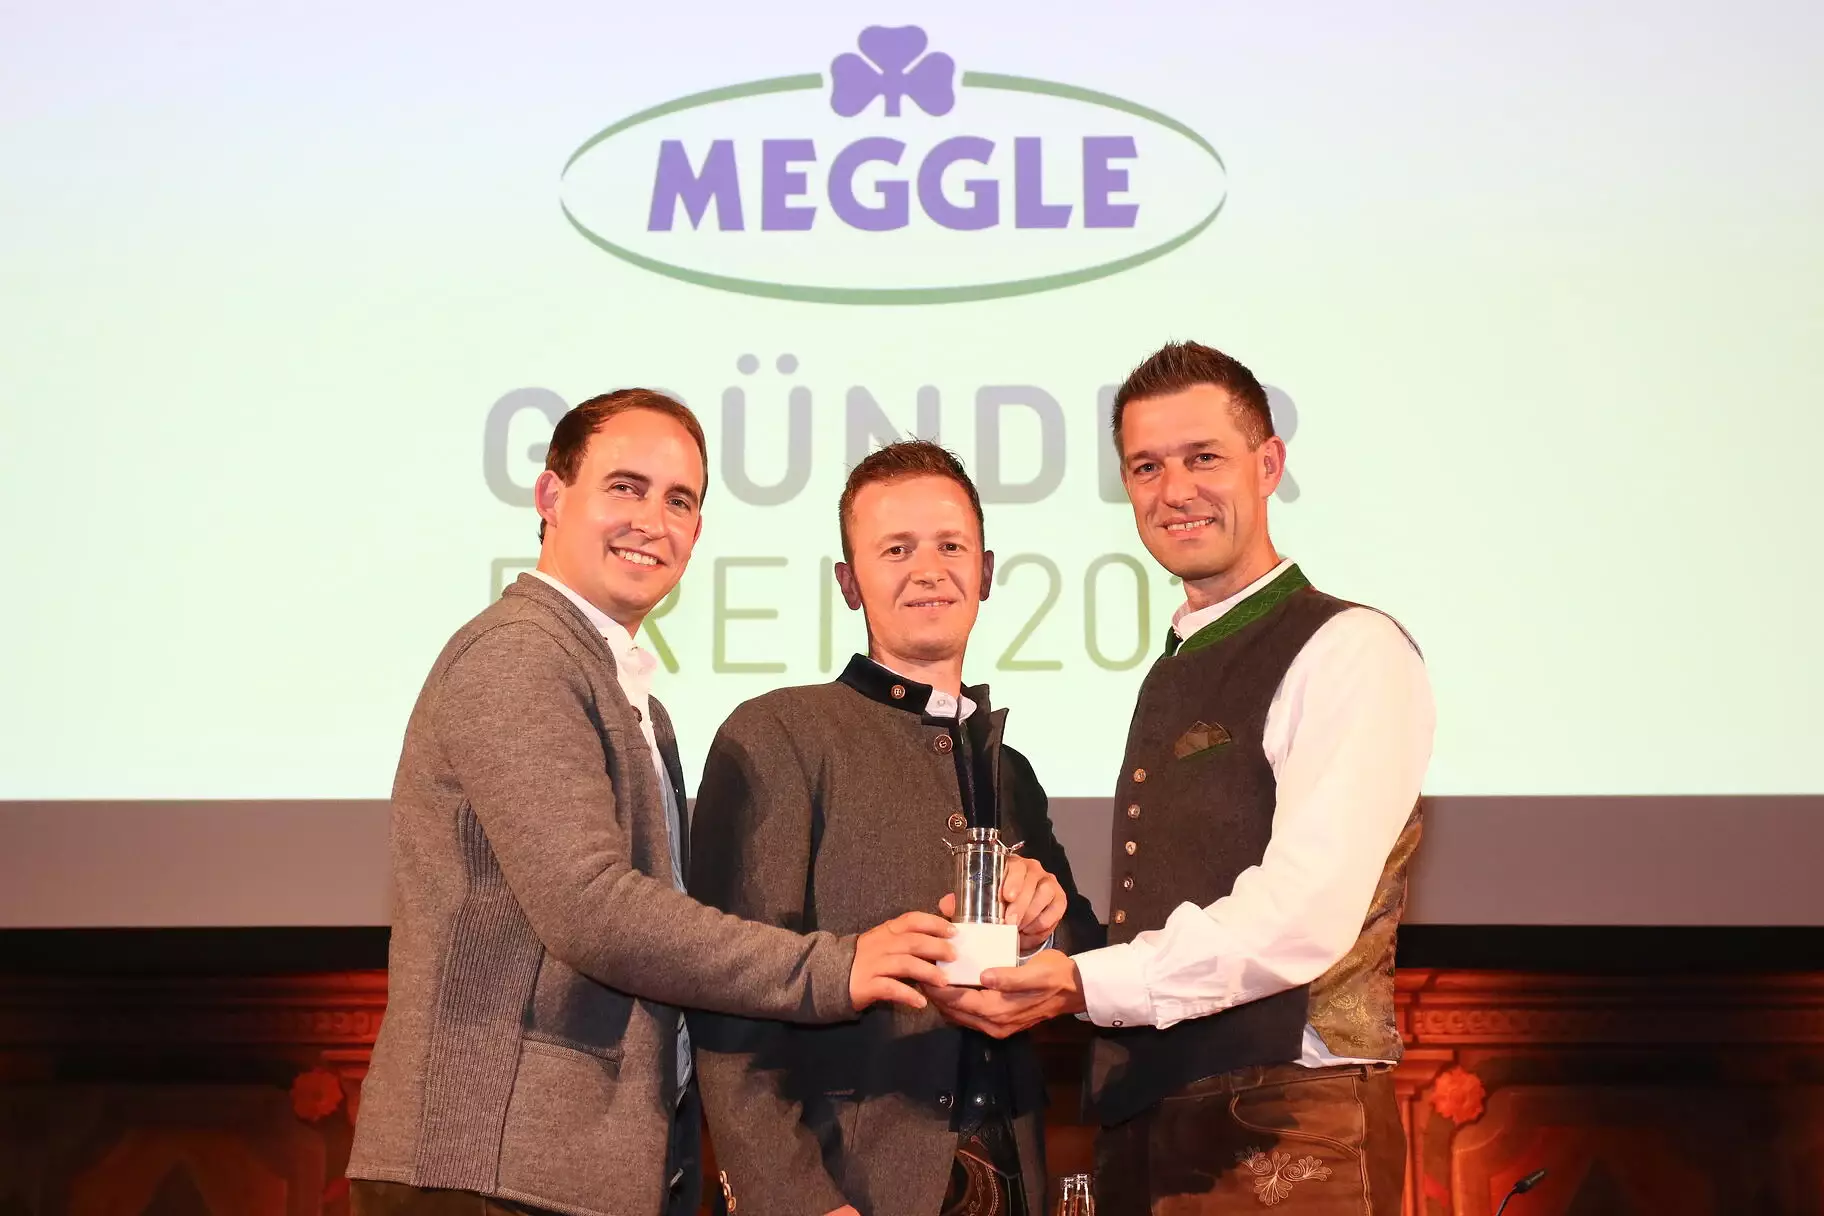 Verleihung des Meggle Gründerpreis 2018 